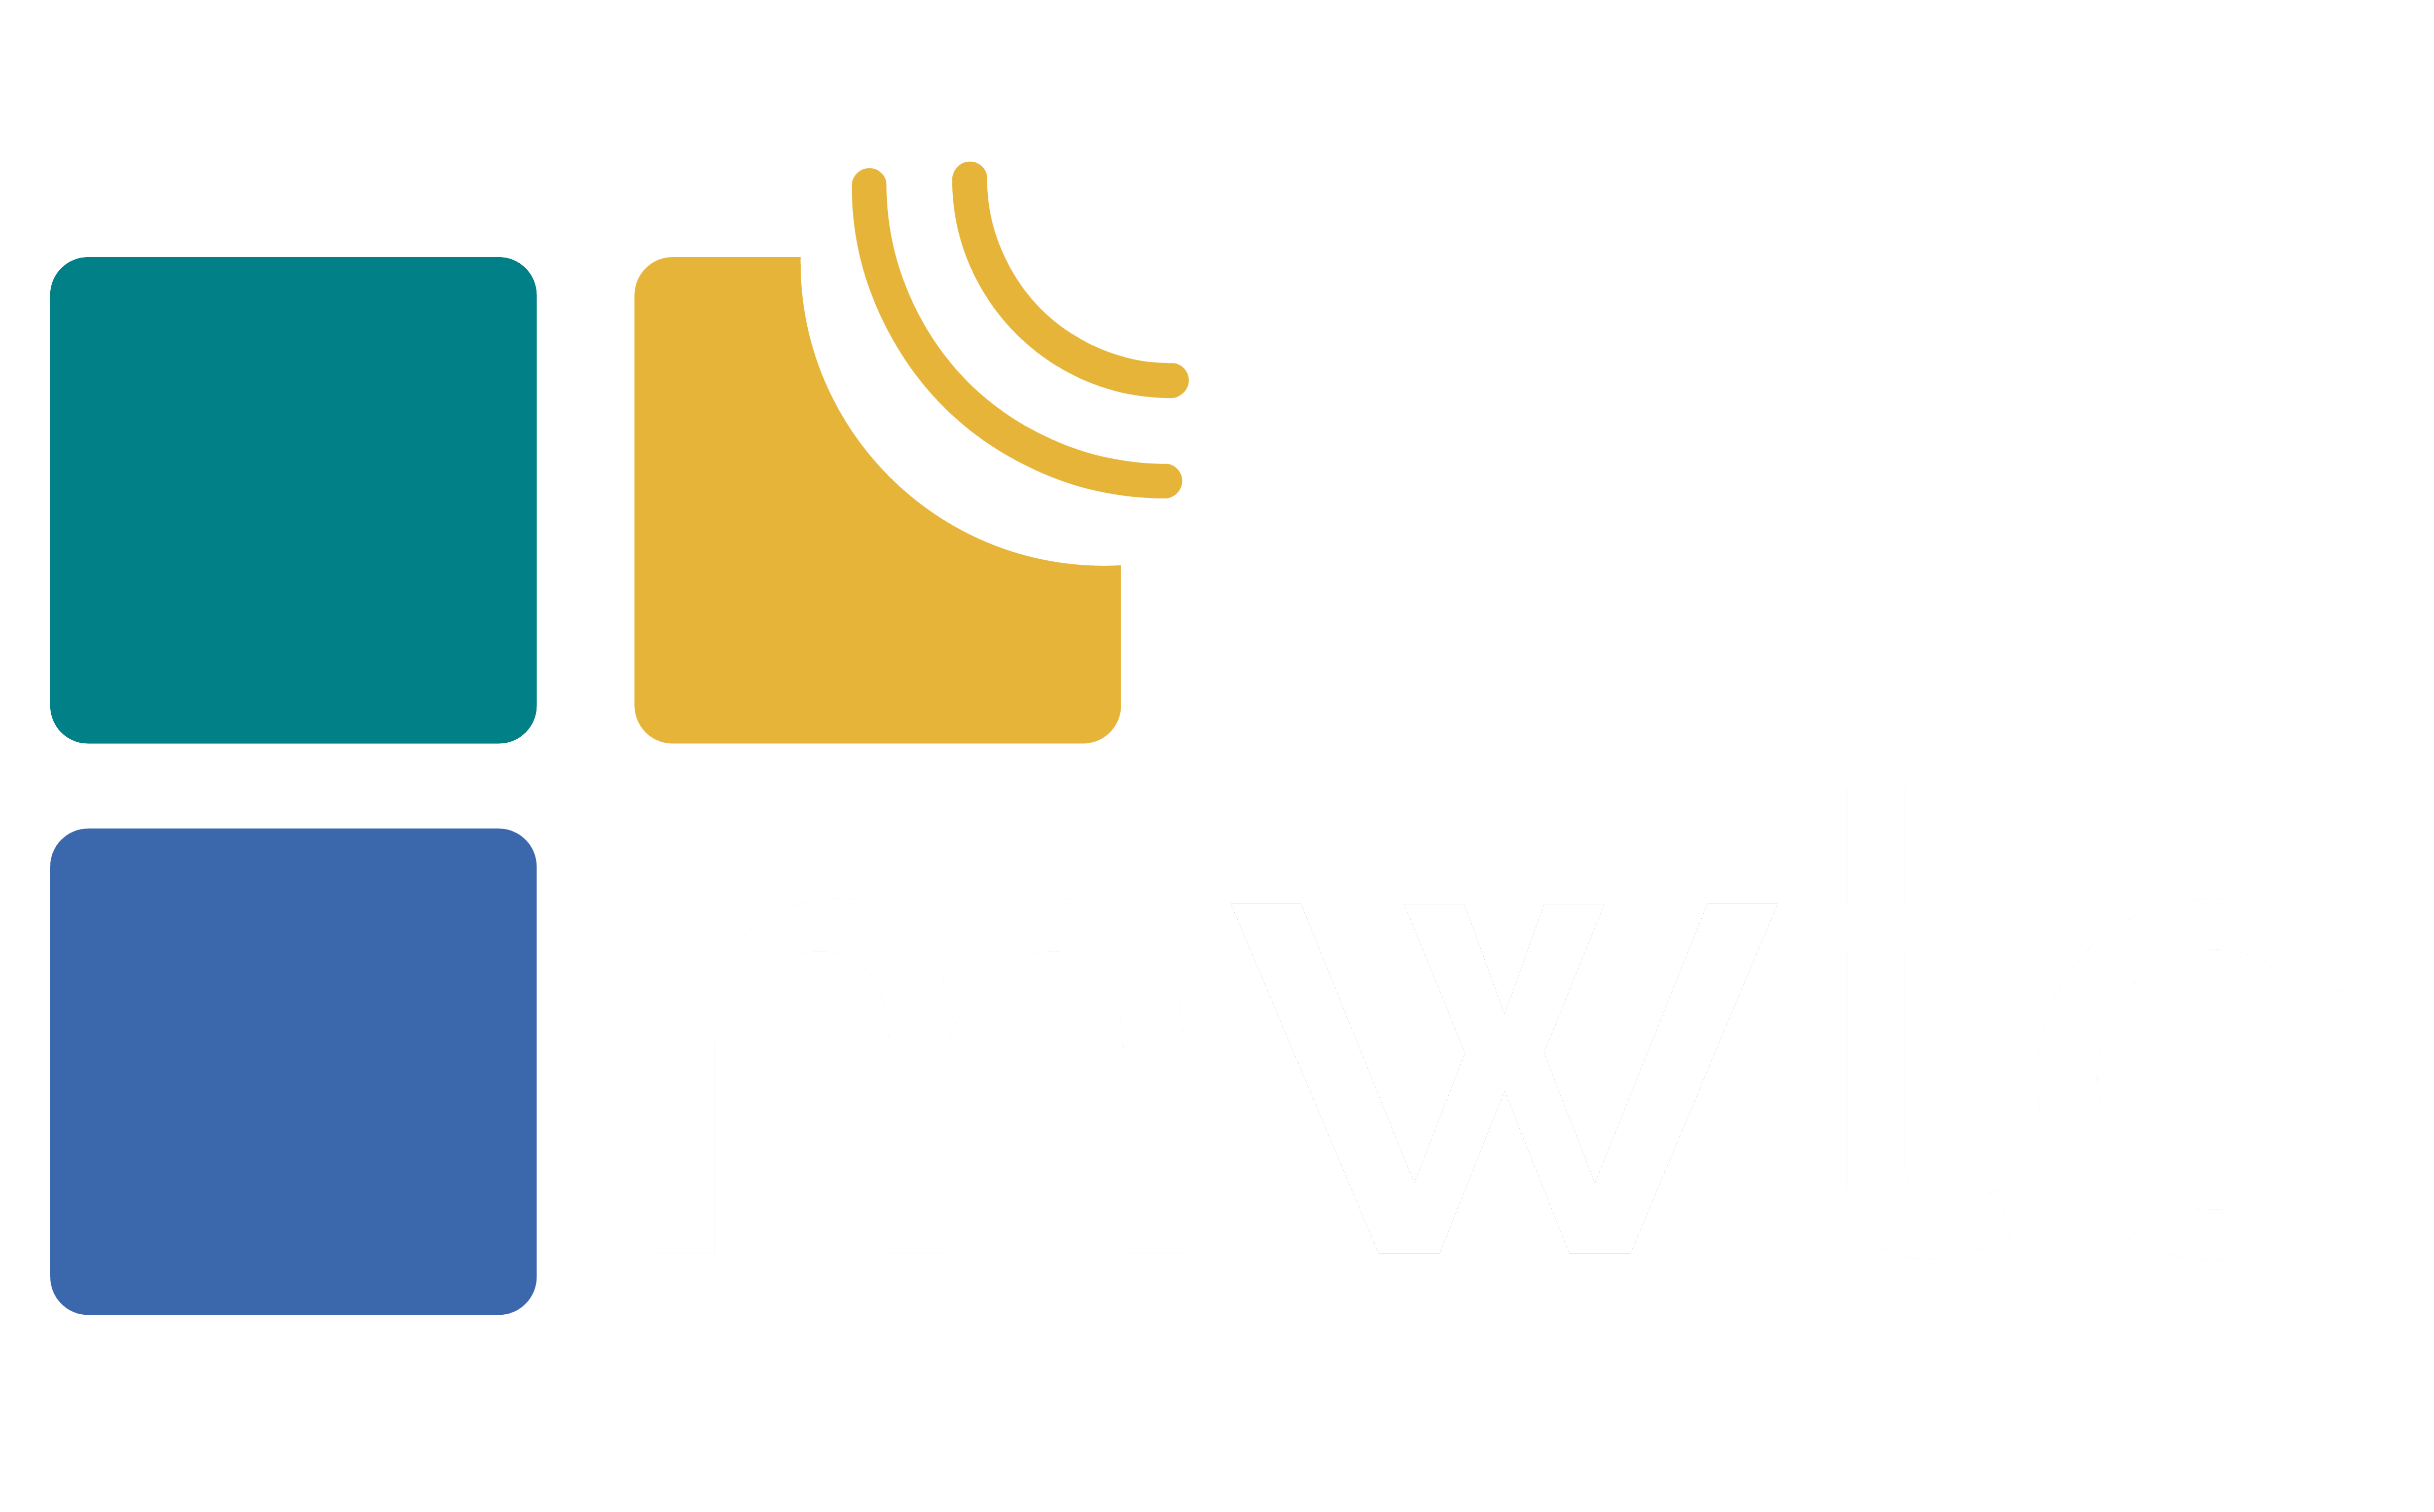 szkolenia-MikroTik-logoMWTC